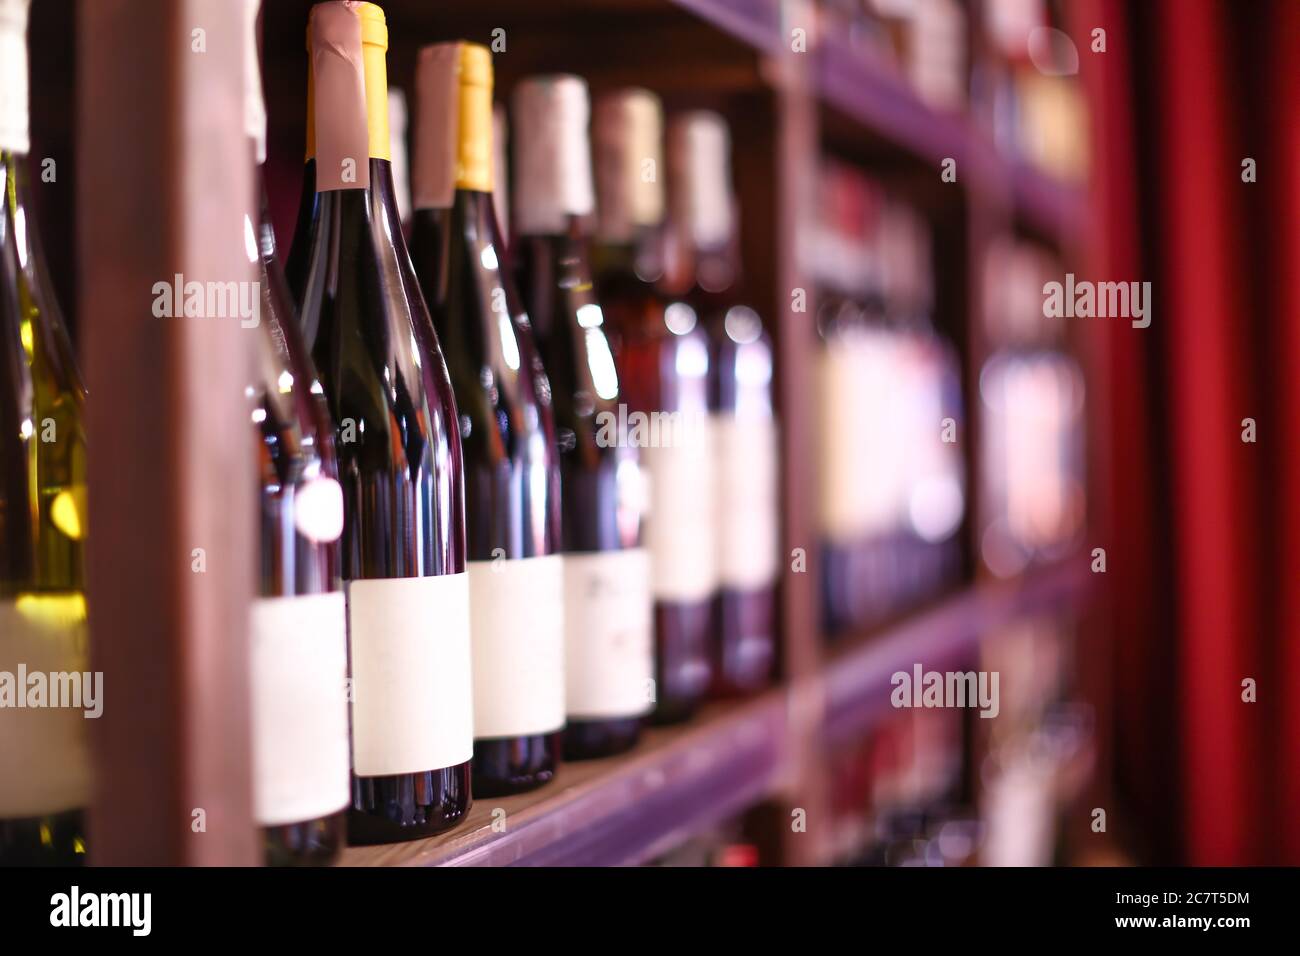 Estante con botellas de vino en la tienda Foto de stock